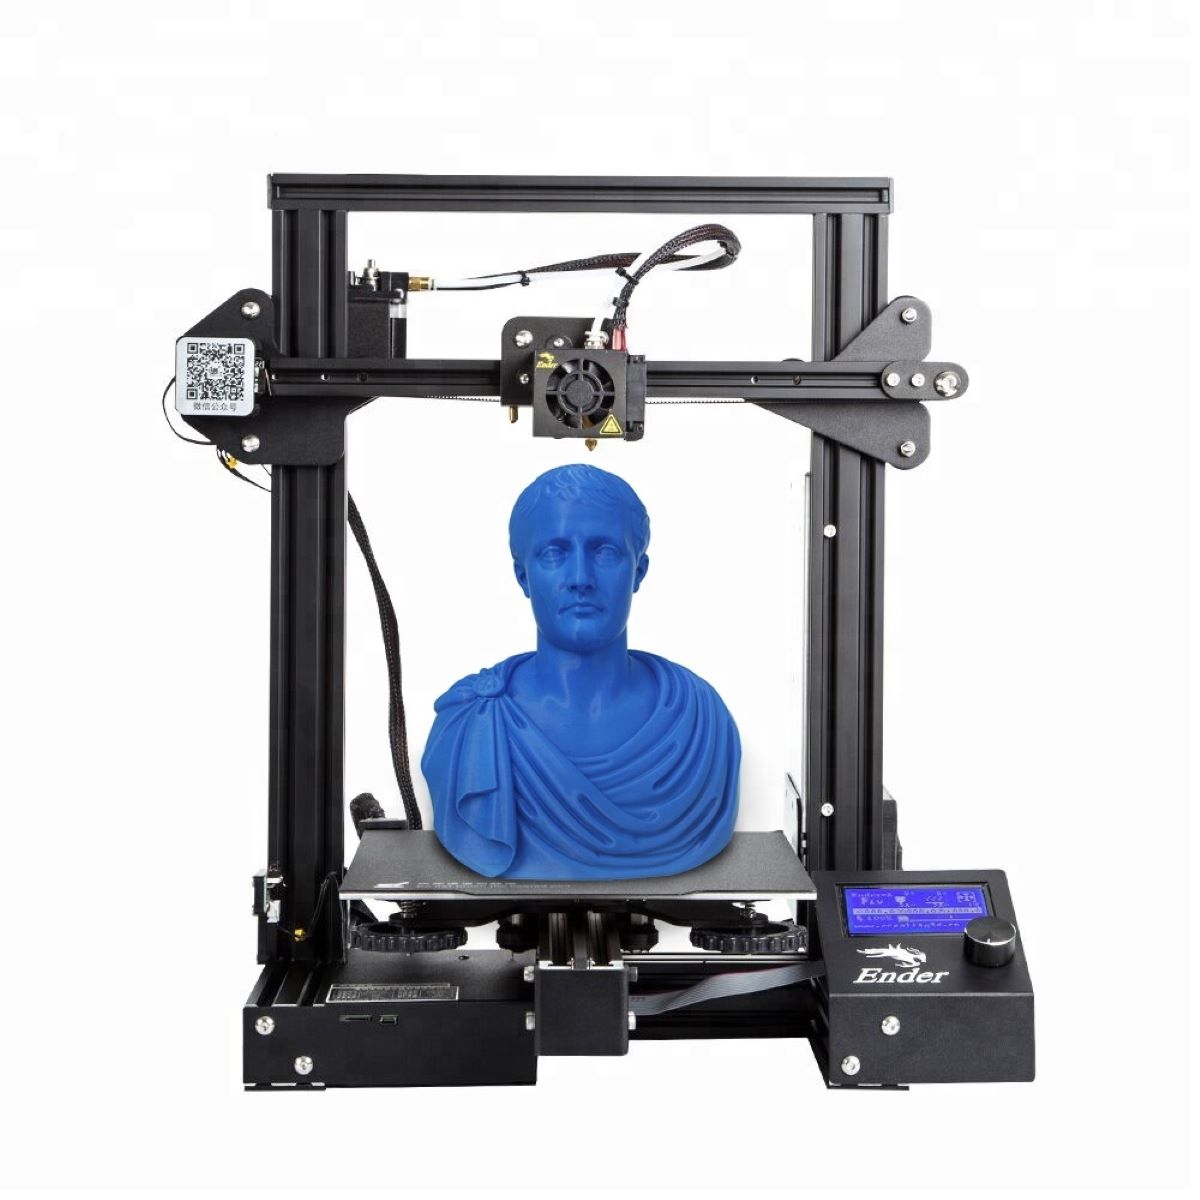 La stampante 3D Creality 3D Ender 3 pro è in offerta a 198 euro